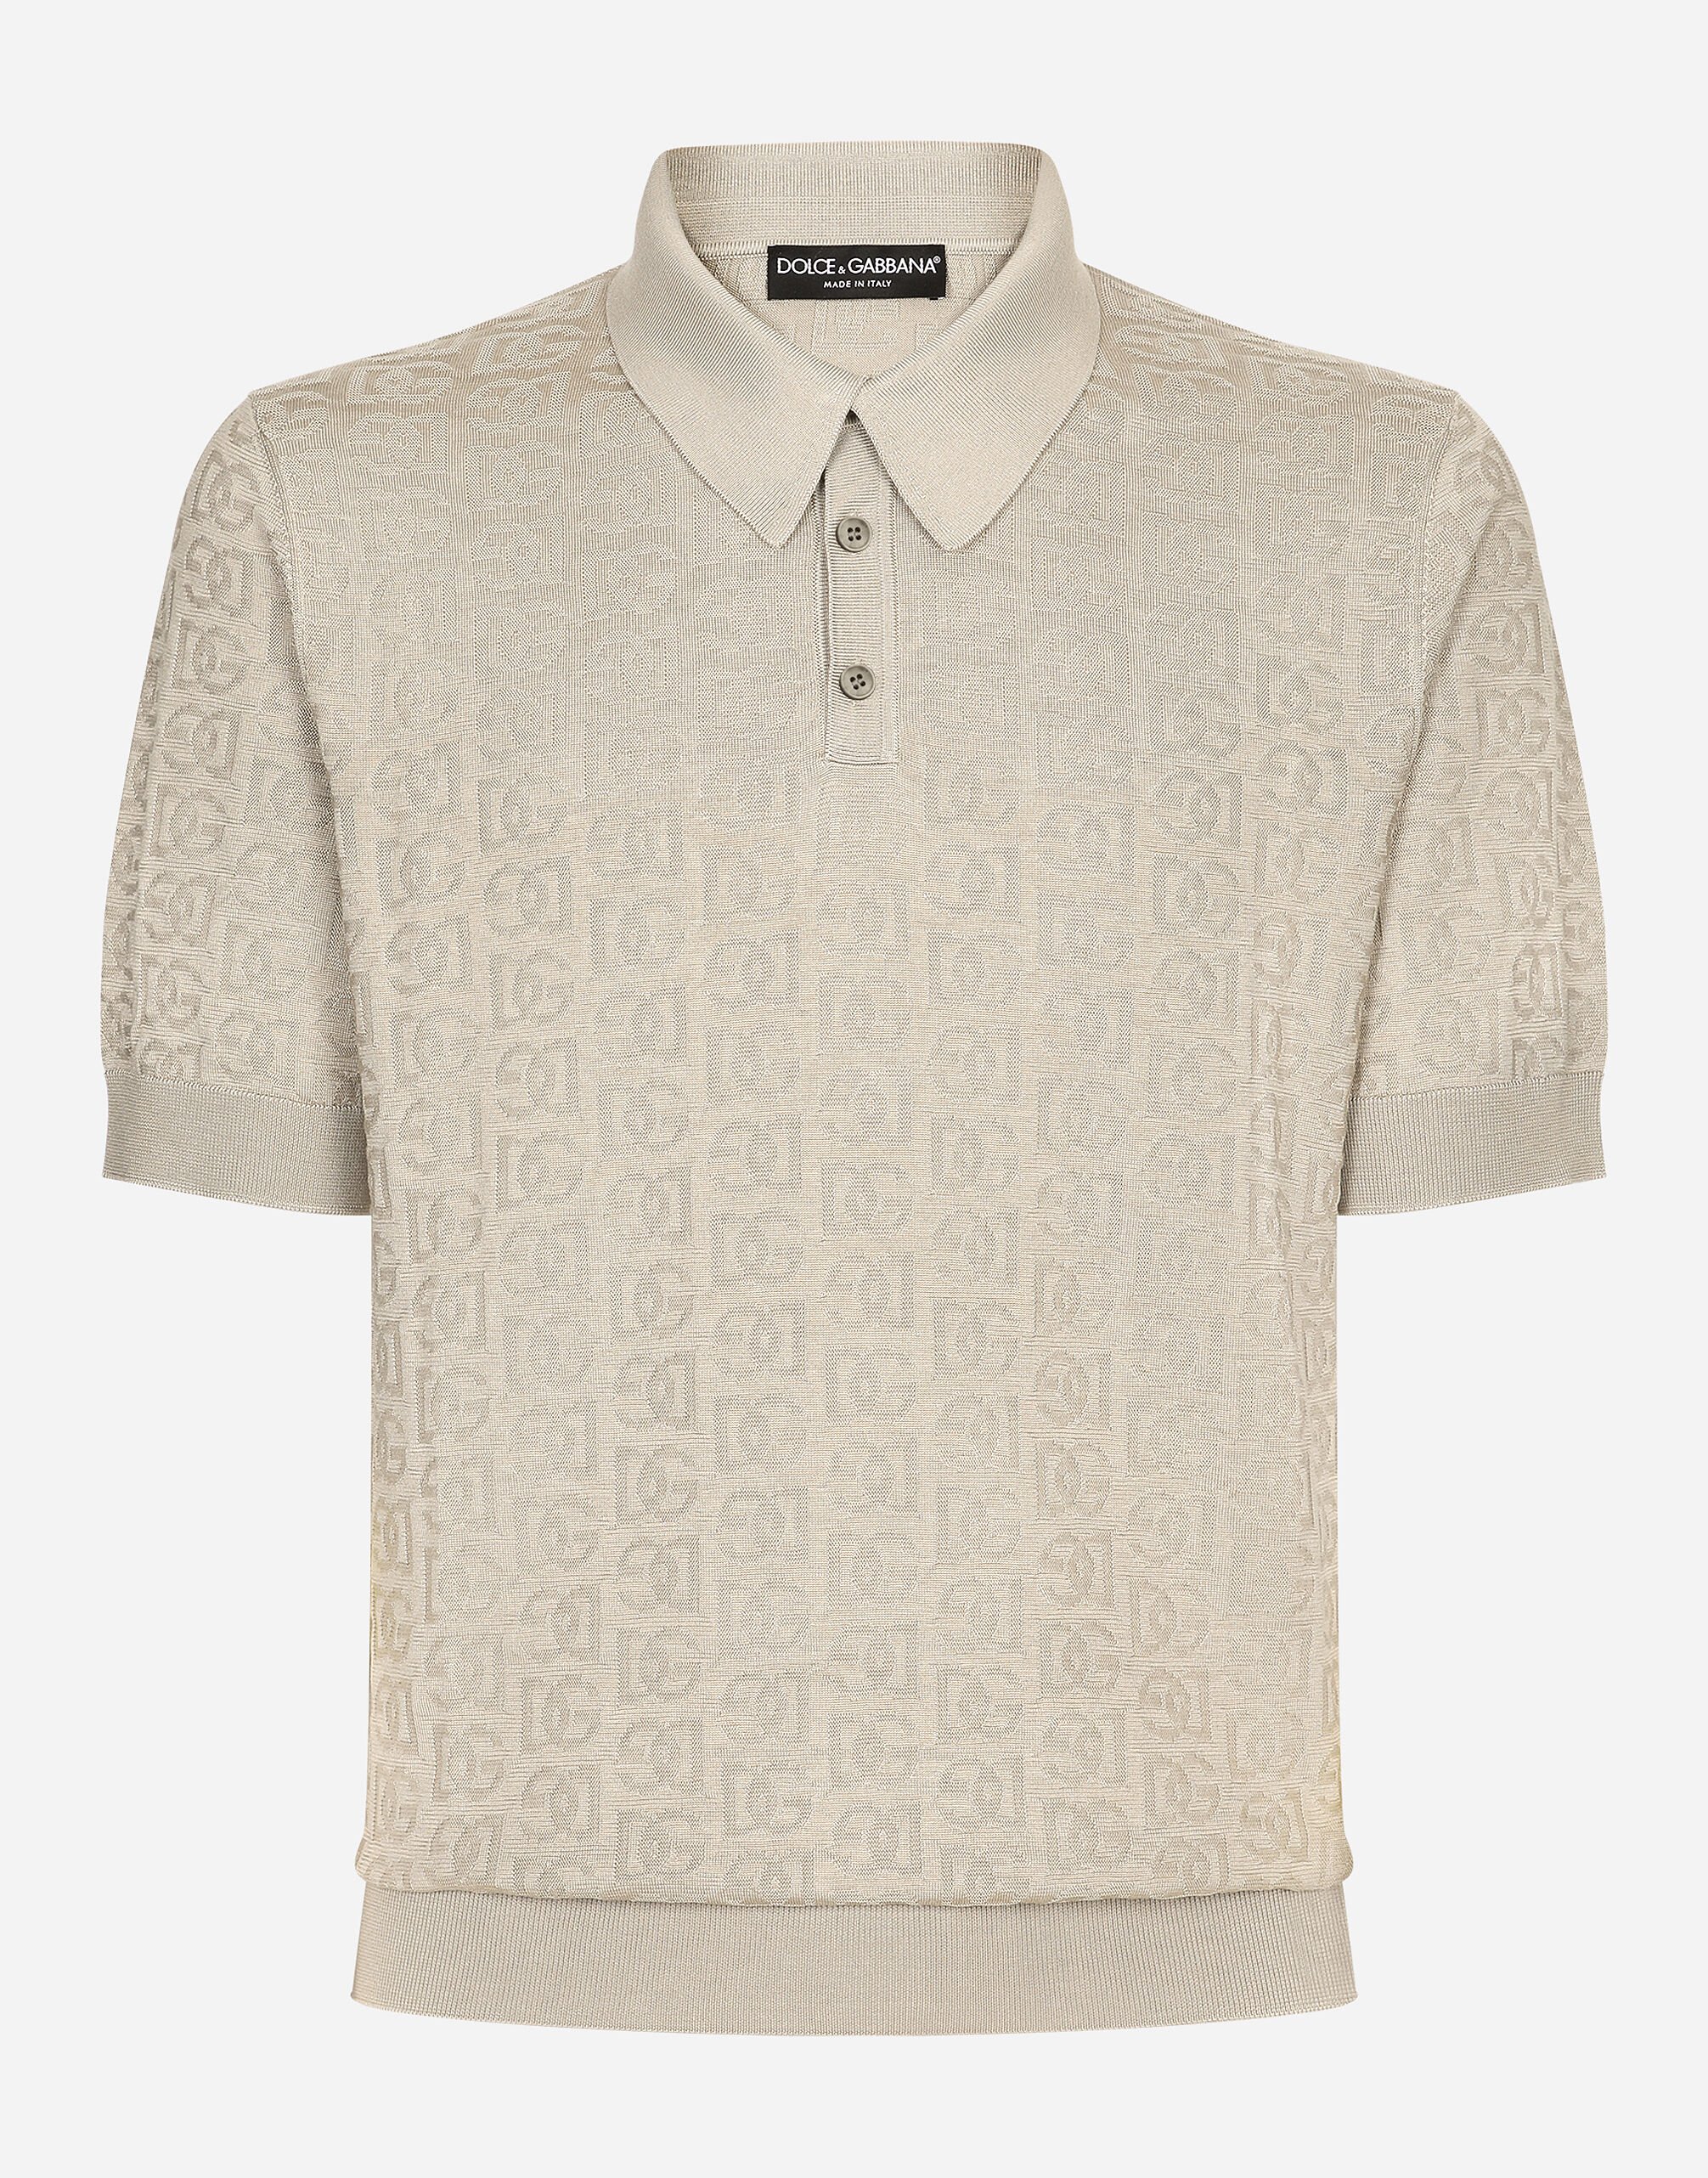 Dolce & Gabbana Silk jacquard polo-shirt with DG logo Print GXV29TJBSJL